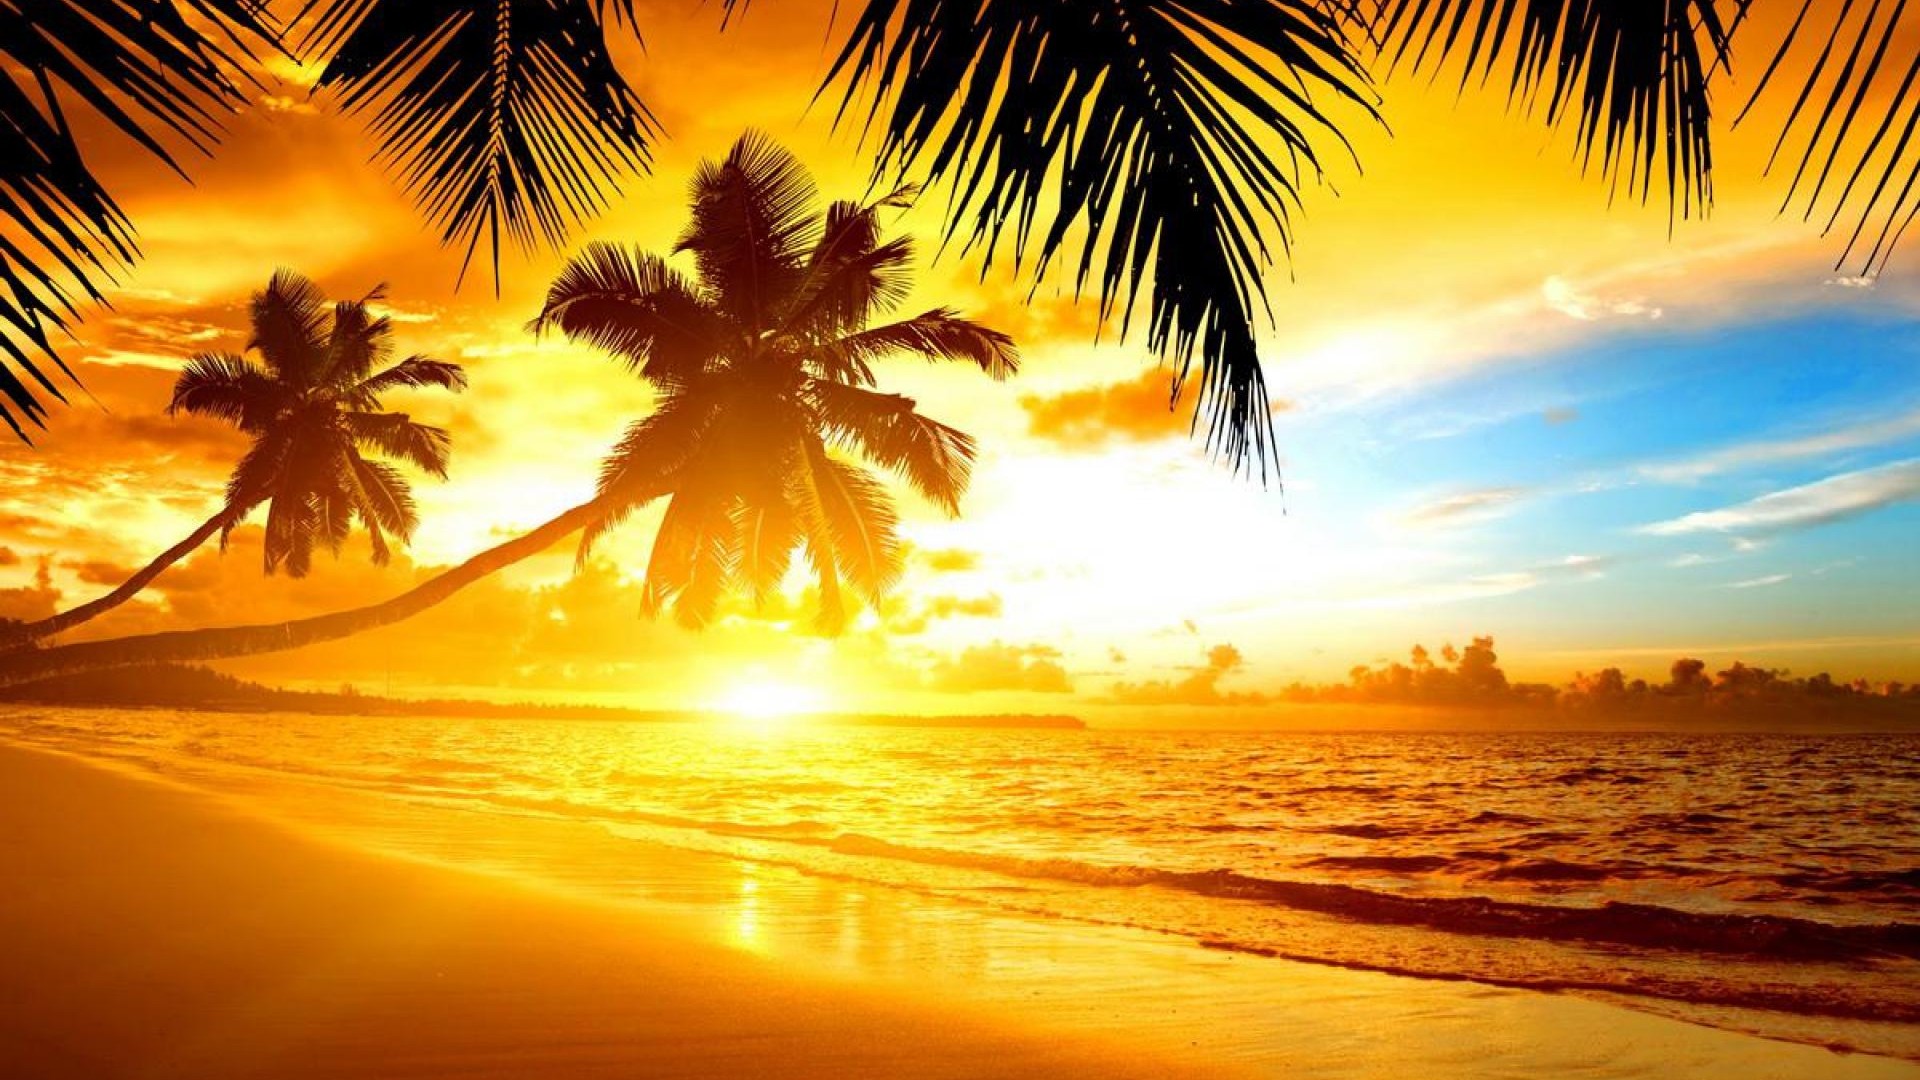 Sunset Beaches Wallpapers Download Free | PixelsTalk.Net